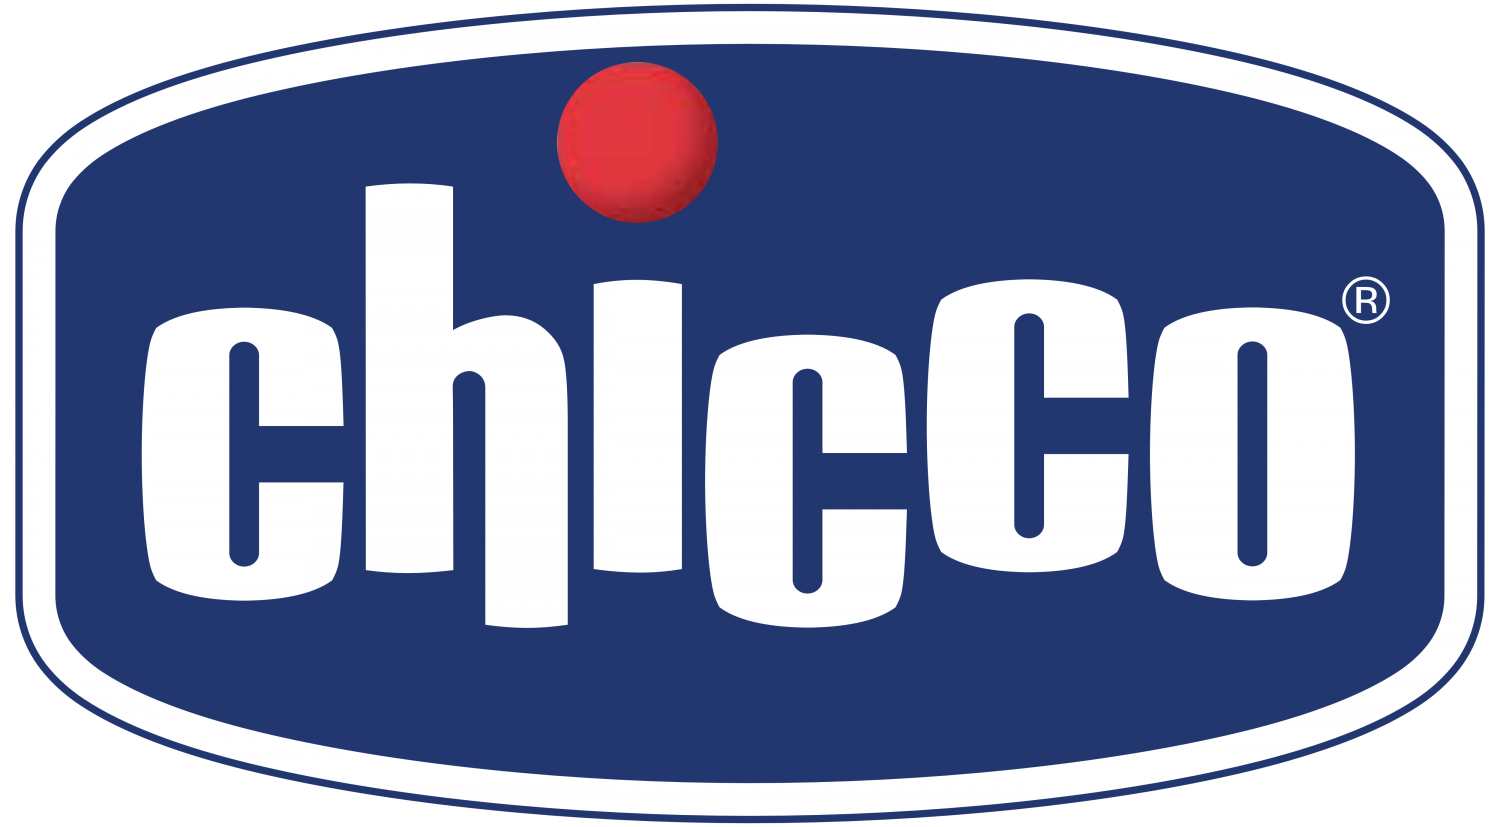 Chicco_logo